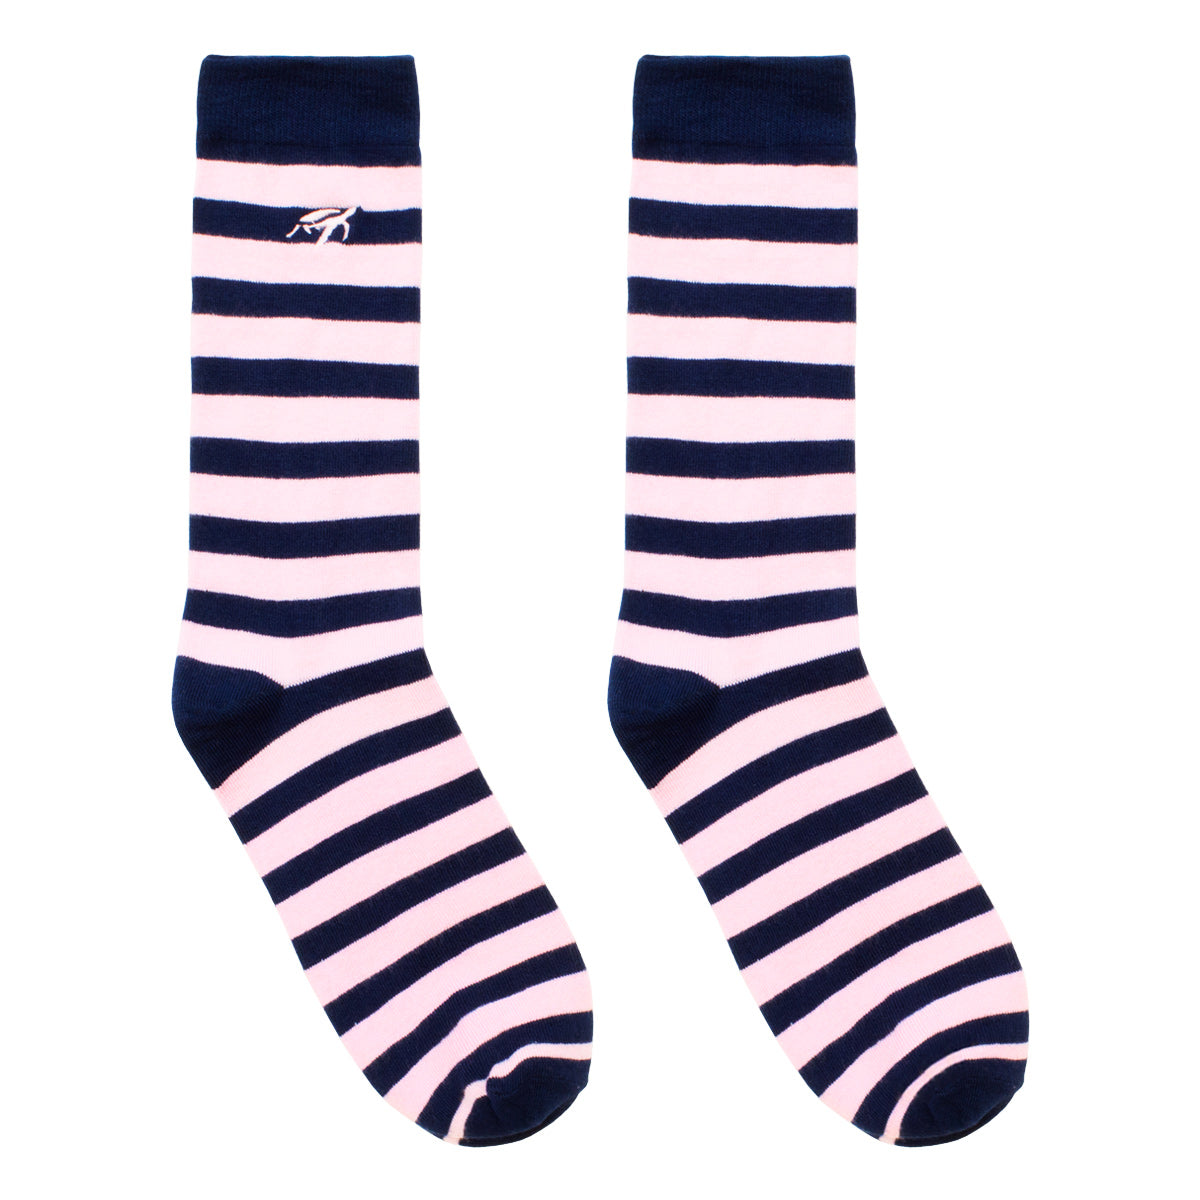 Mullins Bay Adults Bamboo Socks - Navy / Pink Stripe